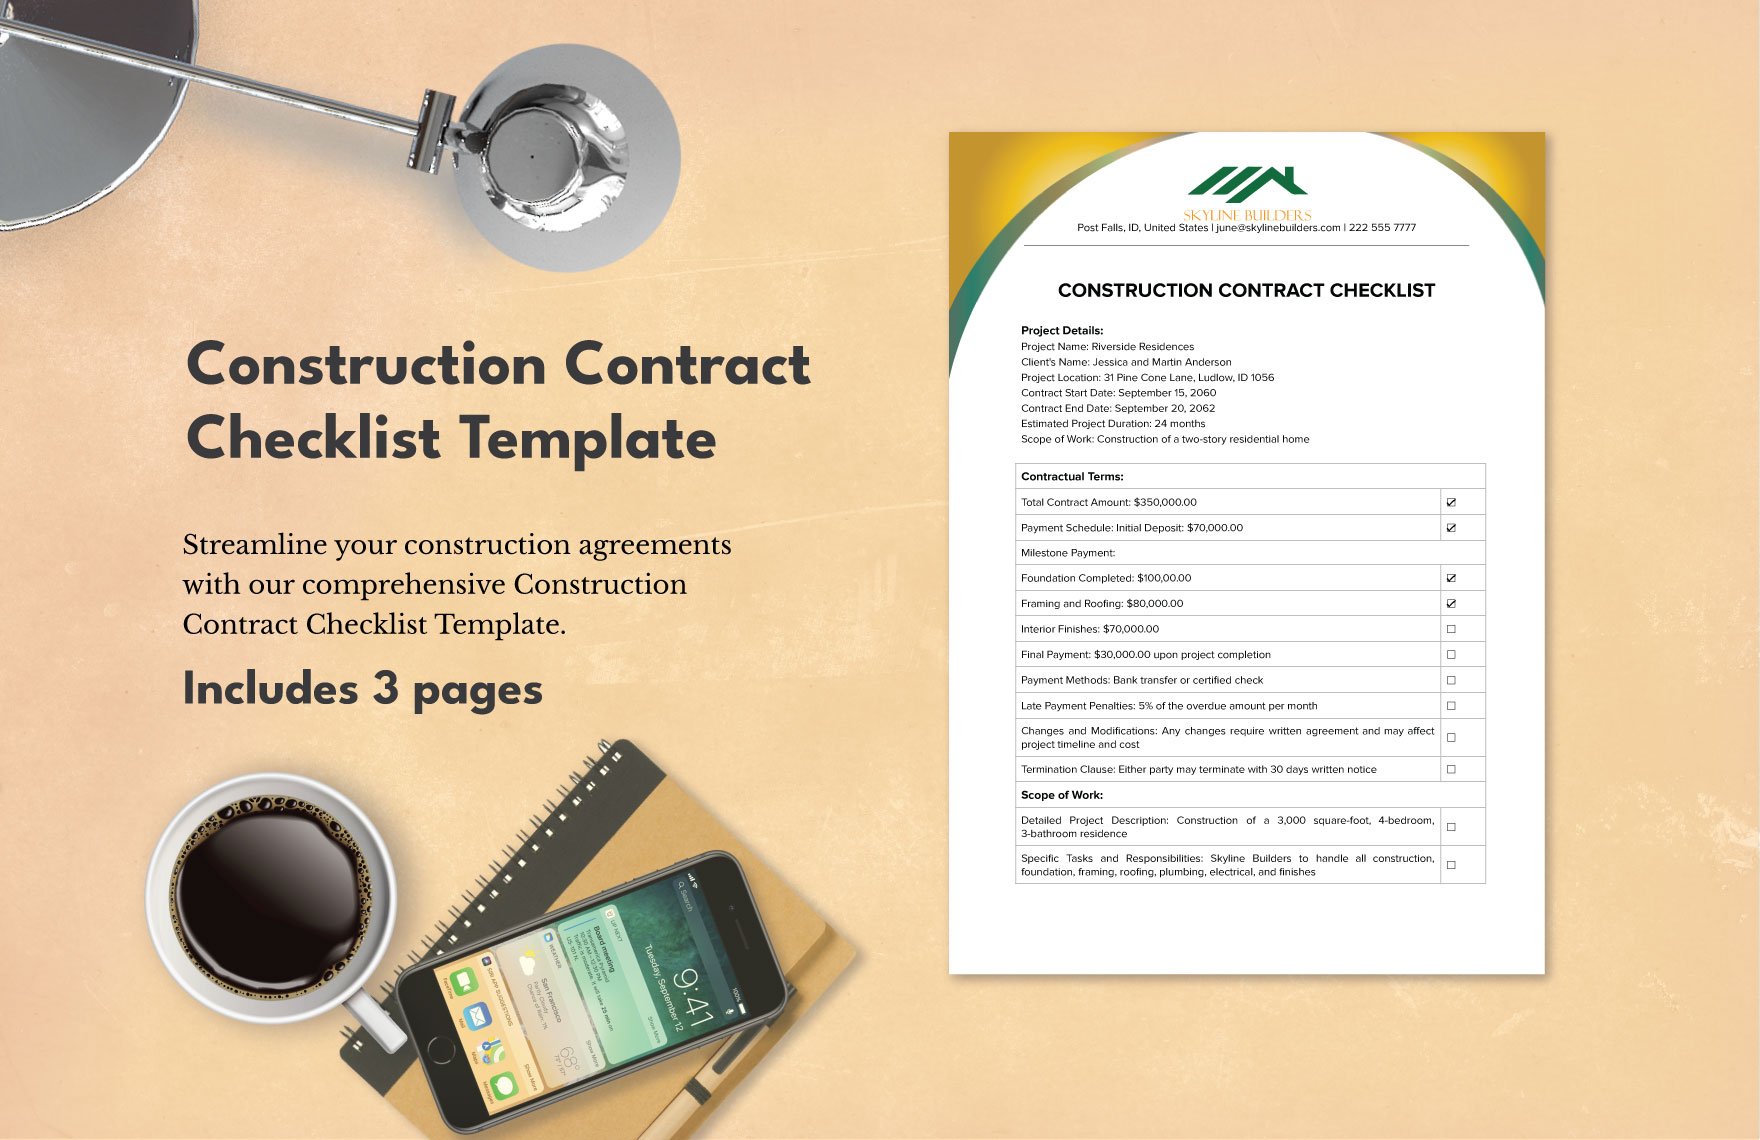 Construction Contract Checklist Template